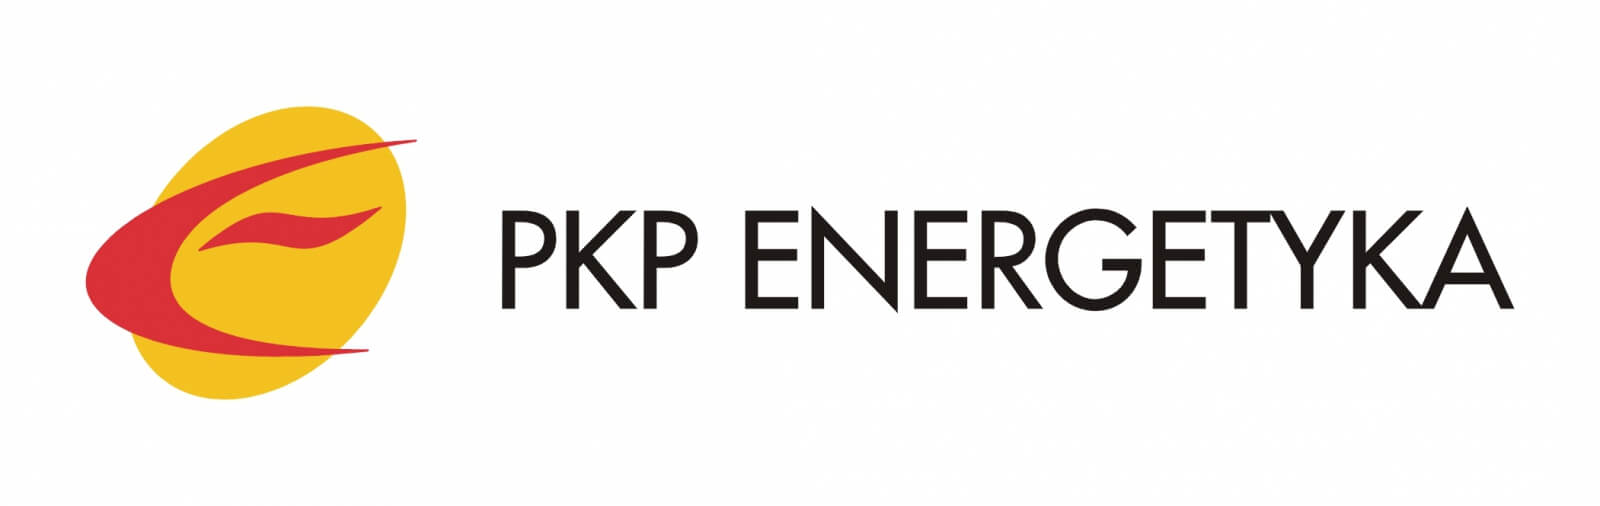 Oferta Lipca 2015: PKP Energetyka dla firm 